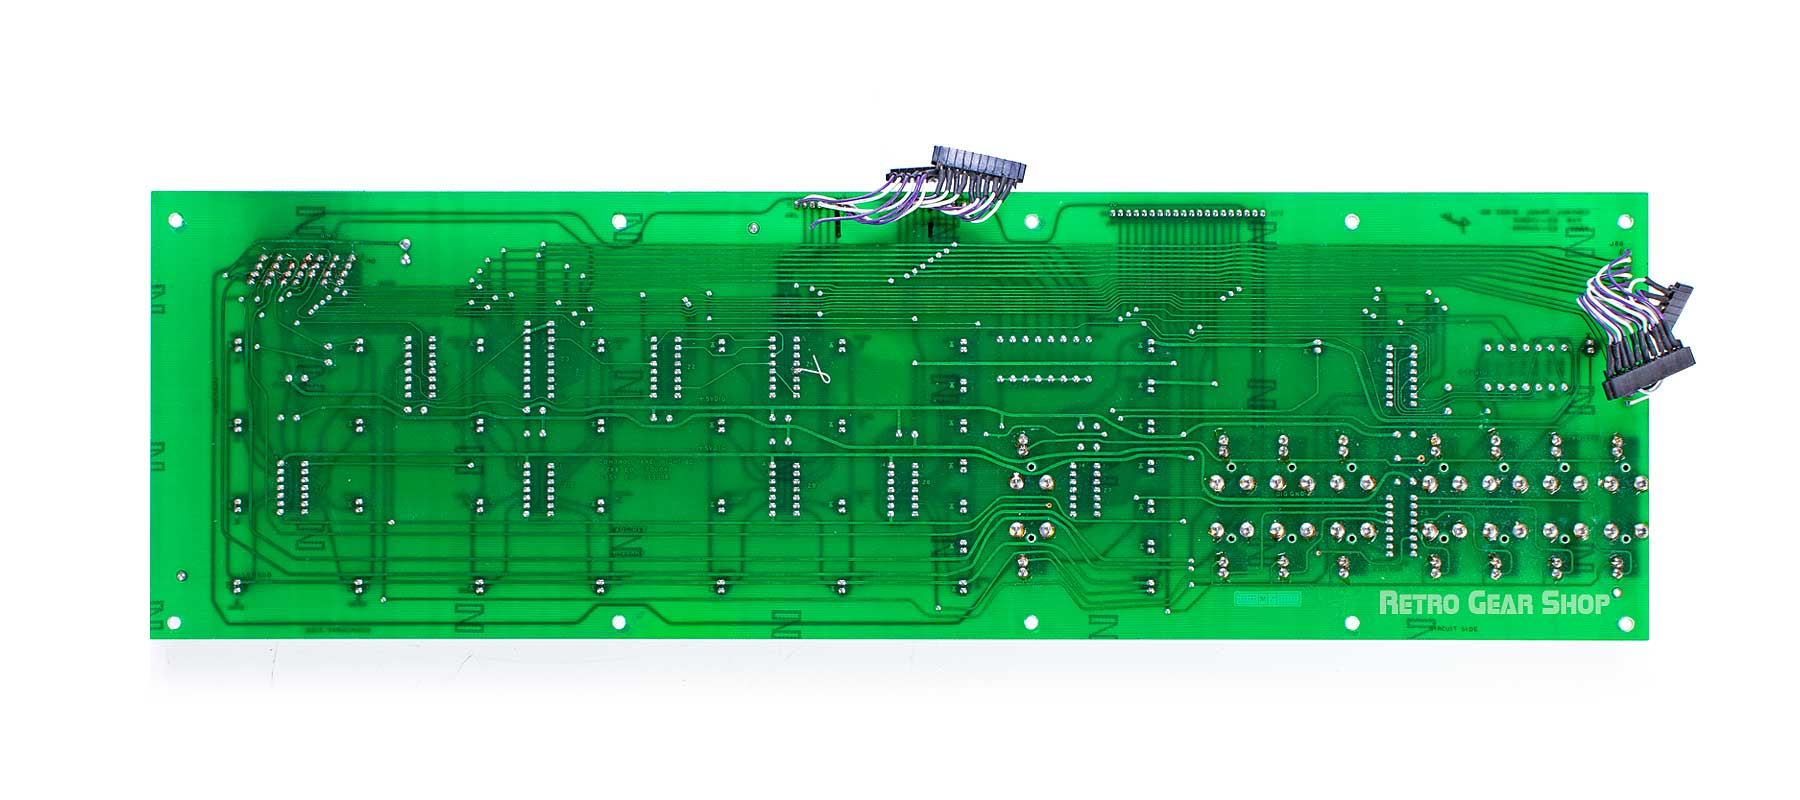 Fender Rhodes Chroma Polaris Keyboard Vintage Control Panel Circuit Board Rare Analog Synth Part Bottom